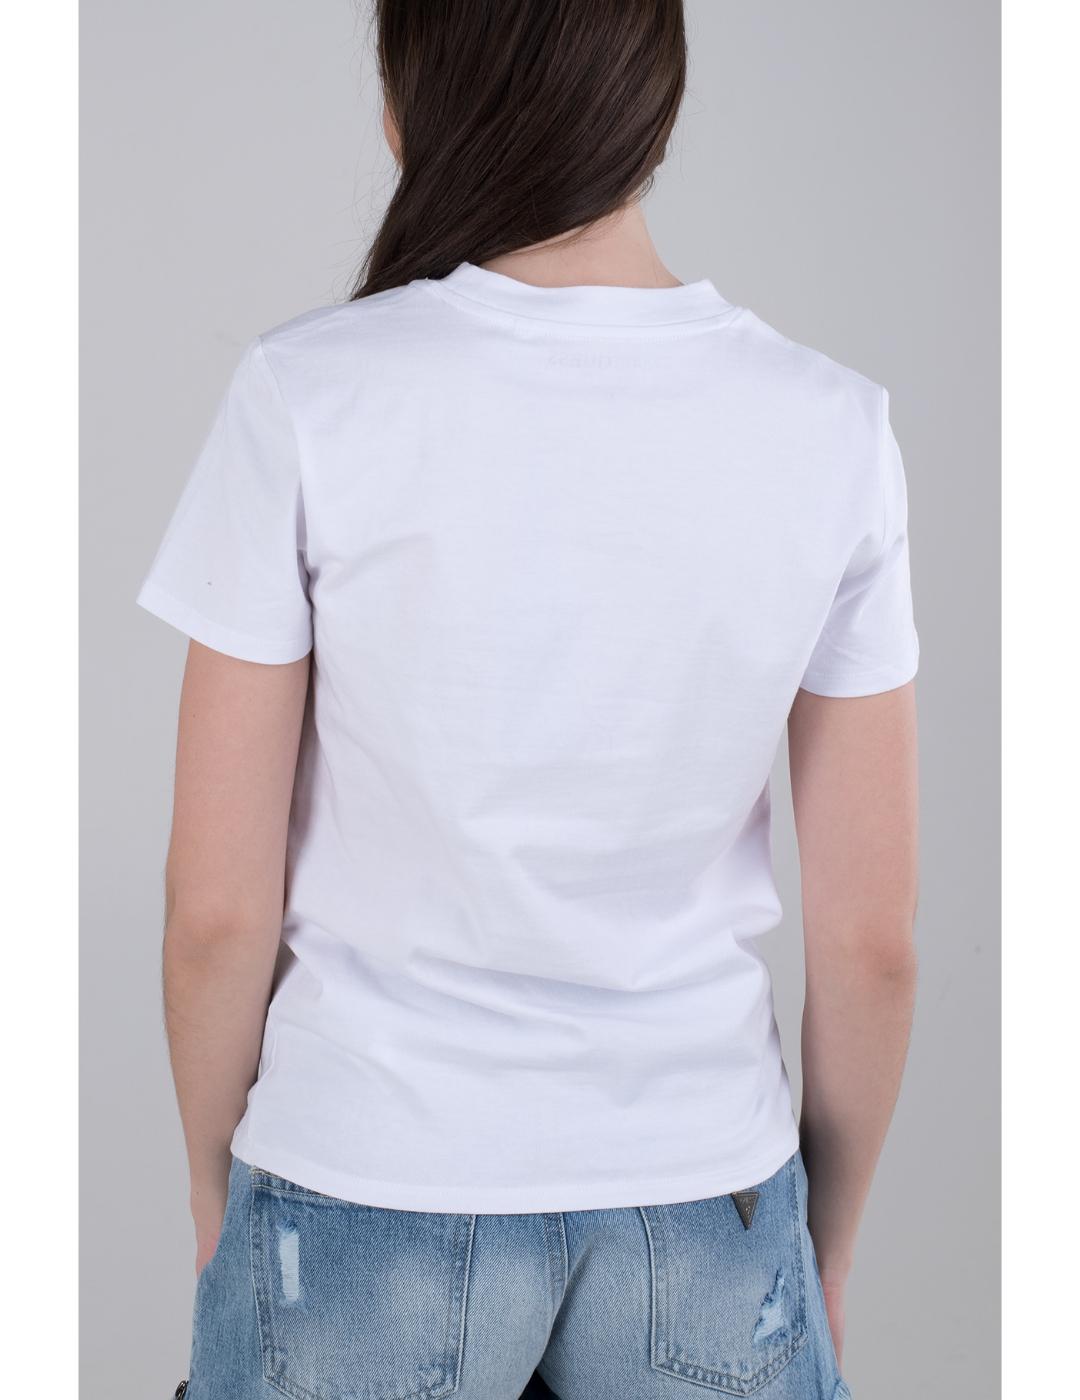 Camiseta Guess classic blanca para mujer